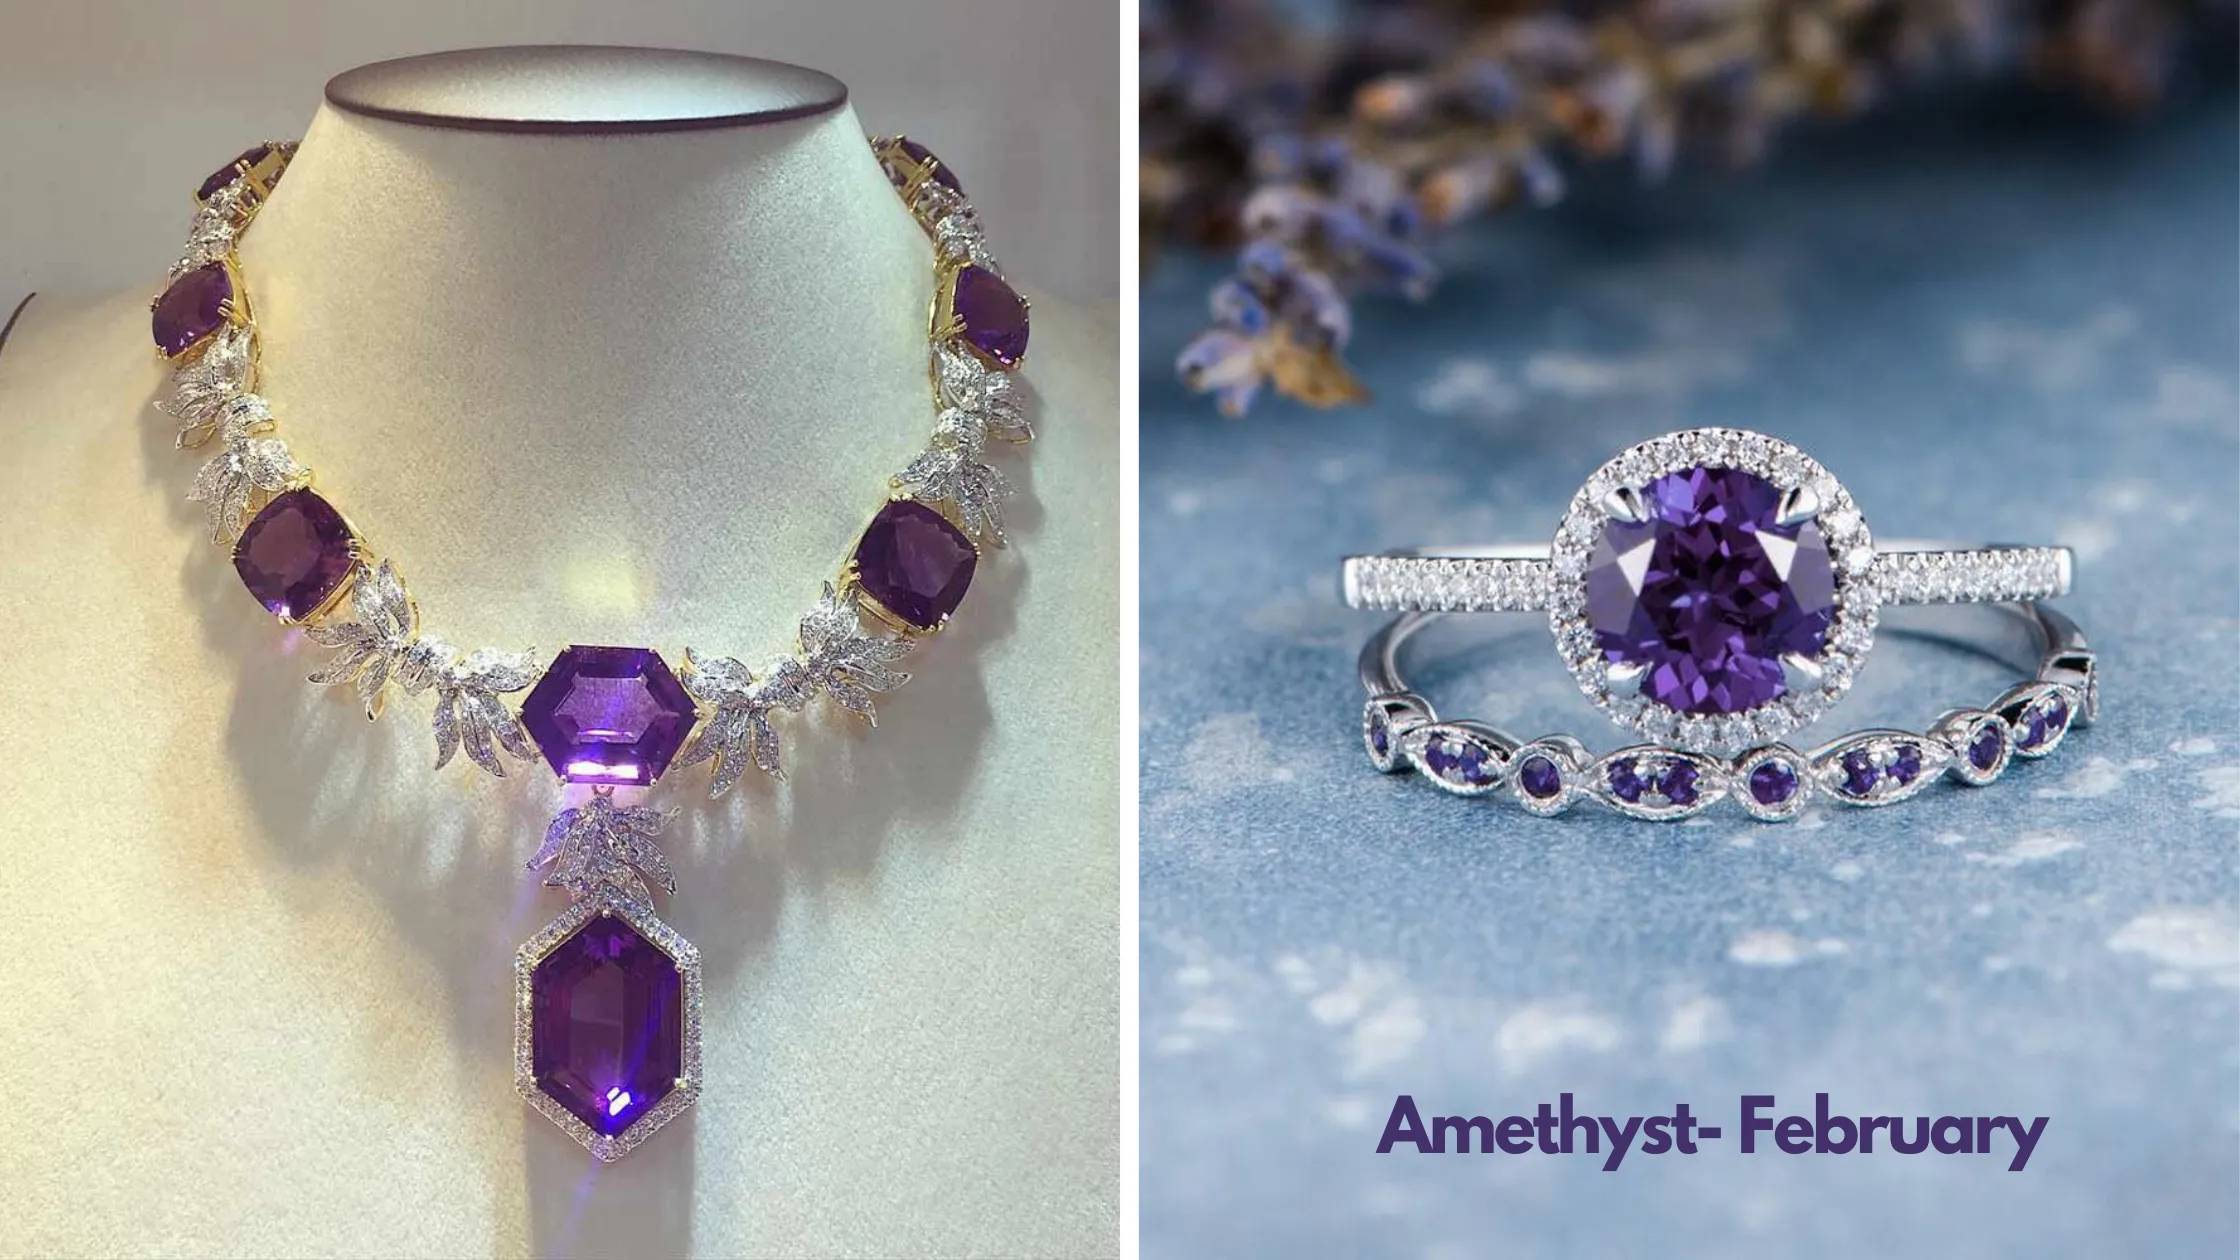 12 Best Birth Month Stones Jewelry 2021 Amethyst February